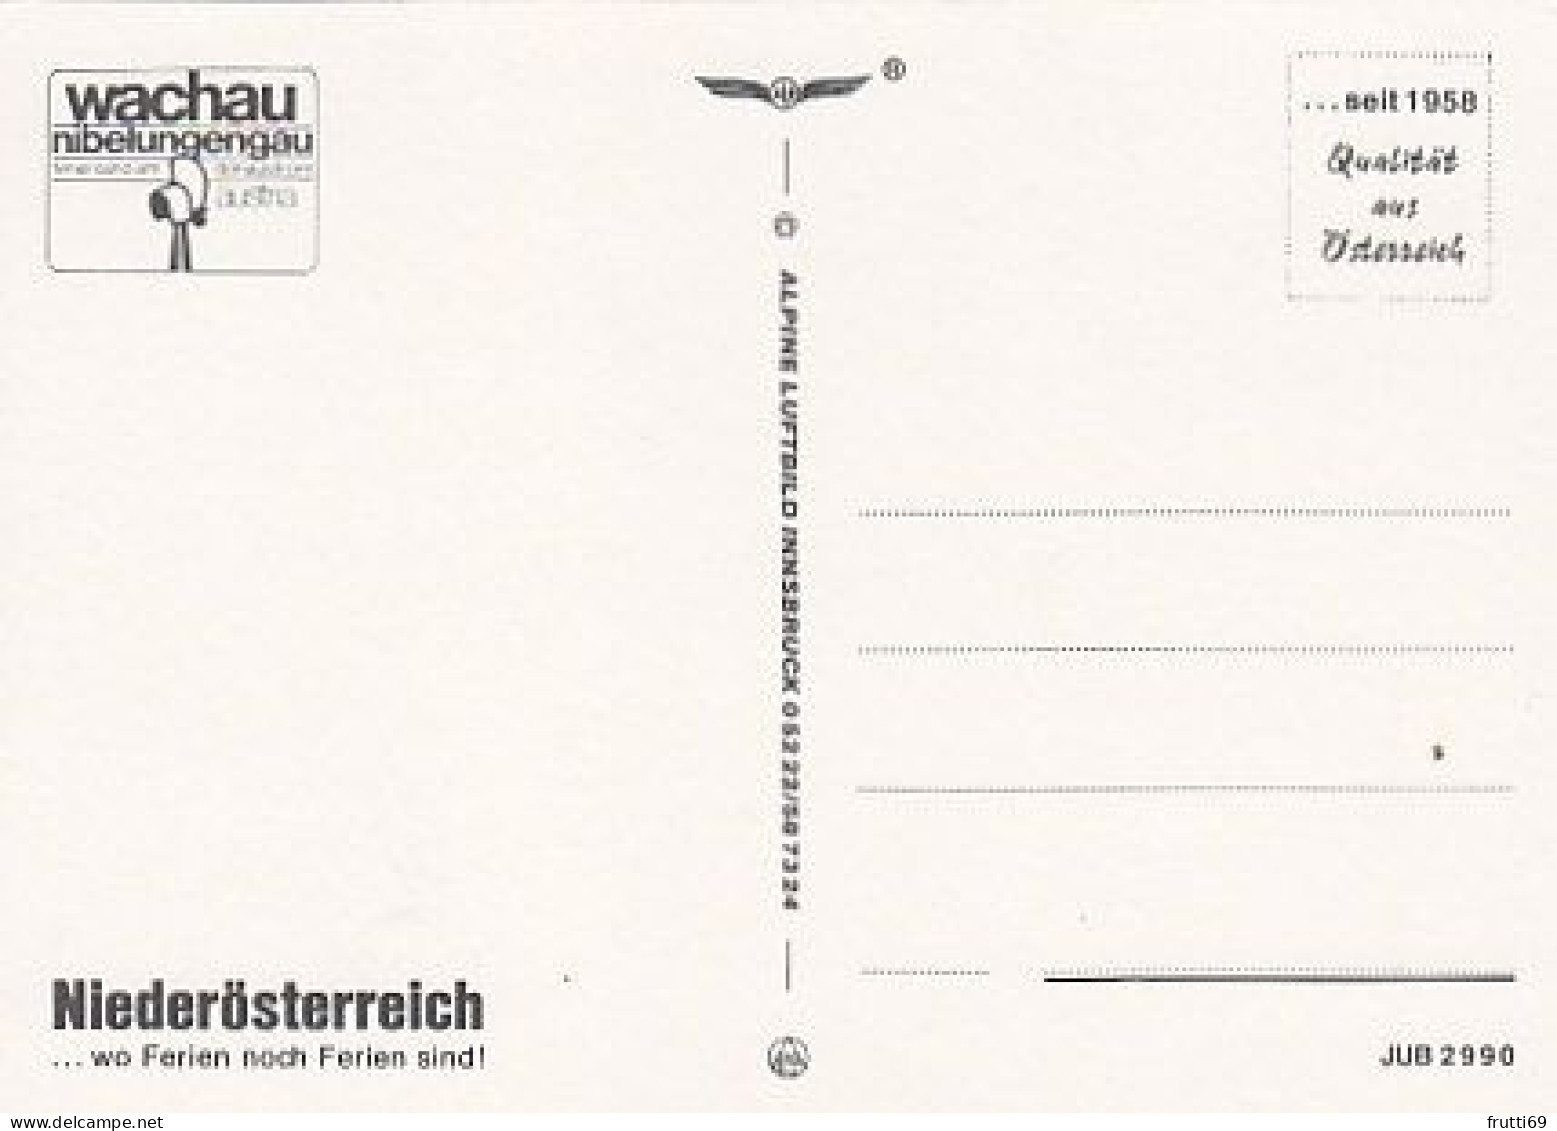 AK 191364 AUSTRIA - Wachau - Nibelungengau - Wachau